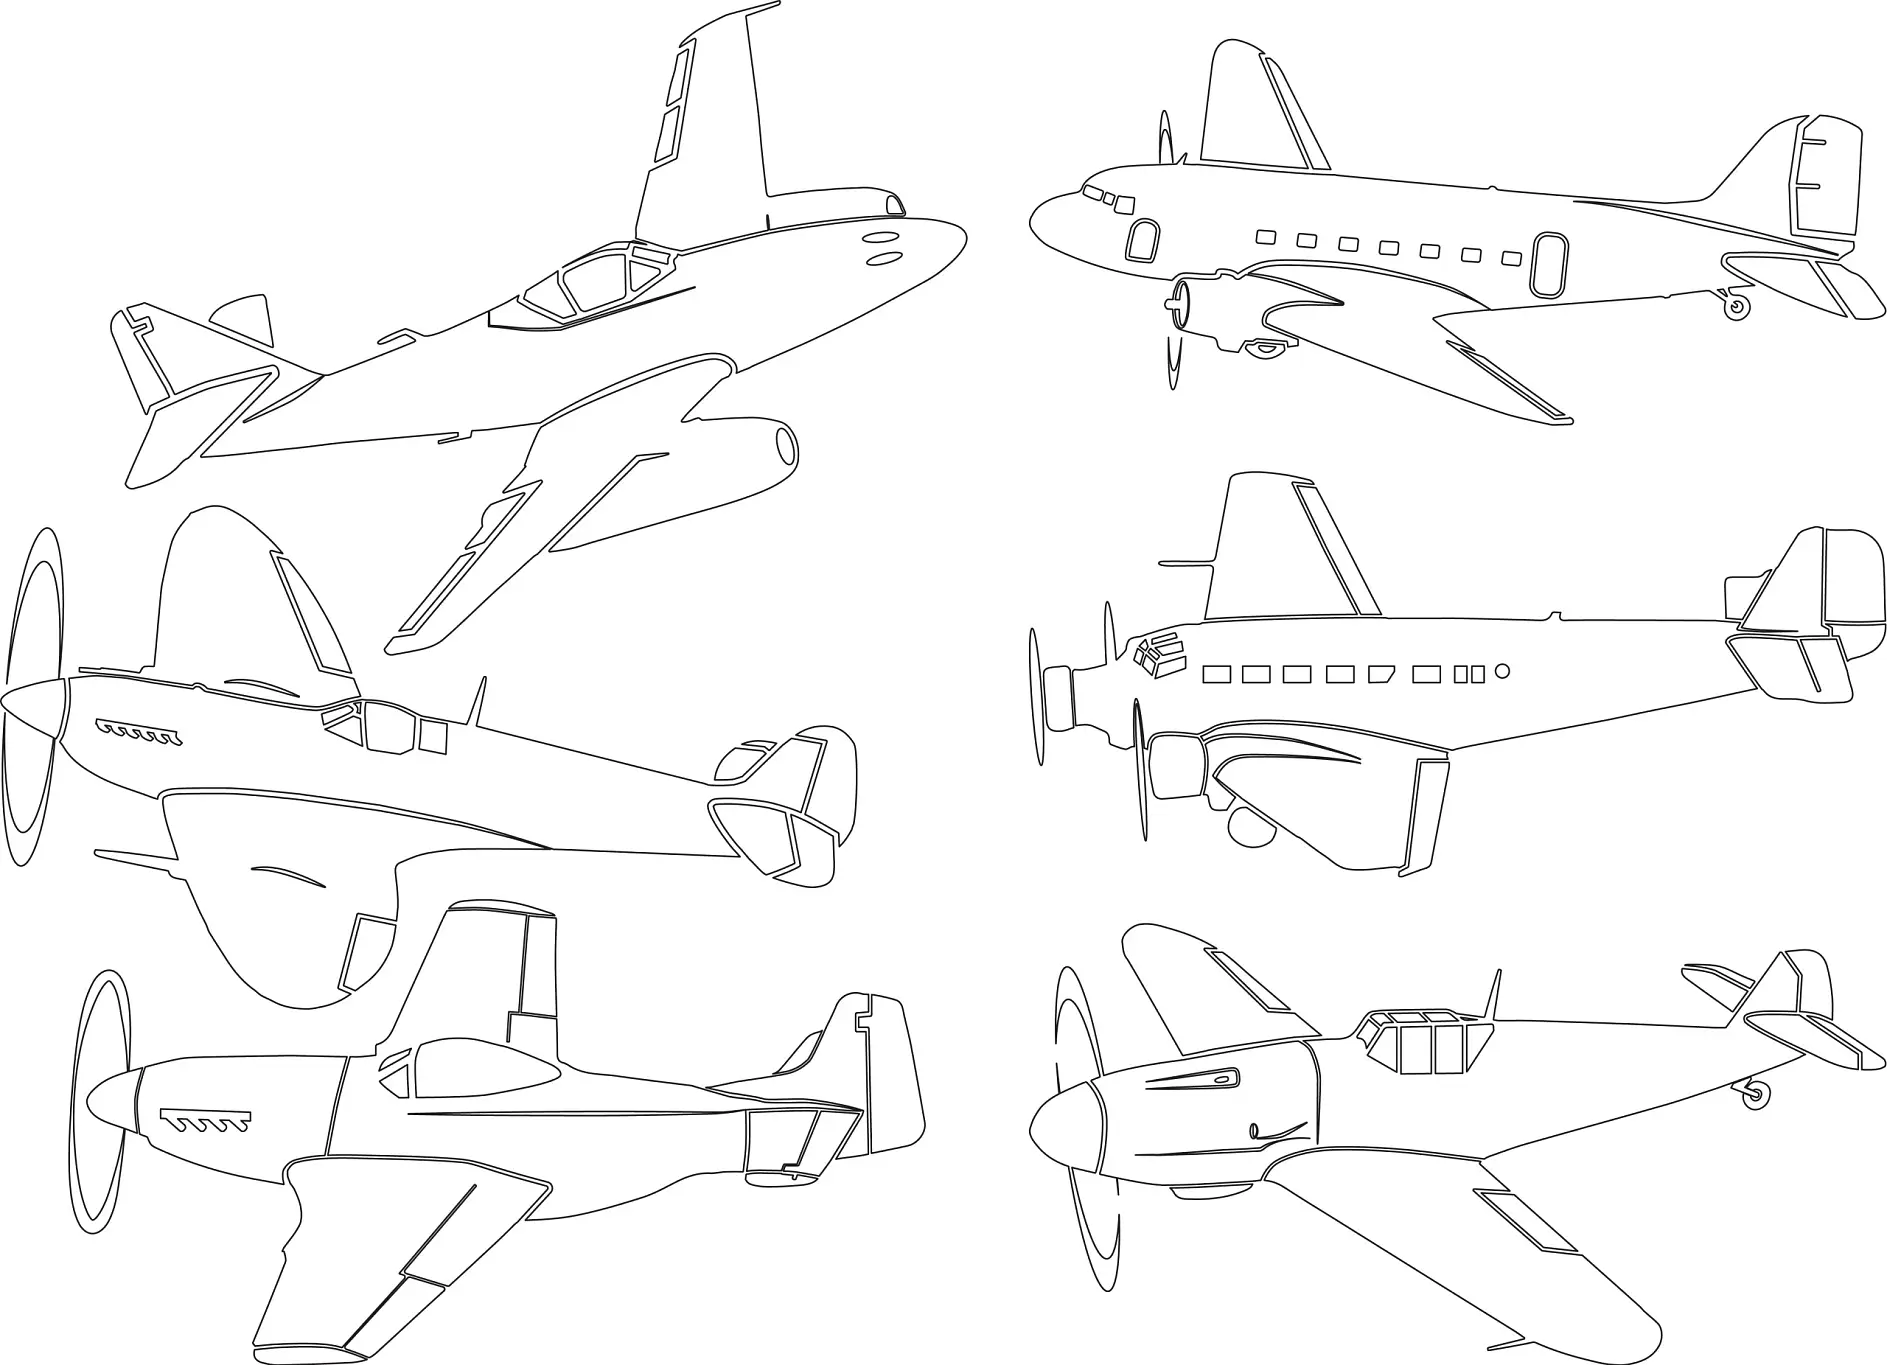 Ausmalbild Flugzeuge in verschiedenen Perspektiven